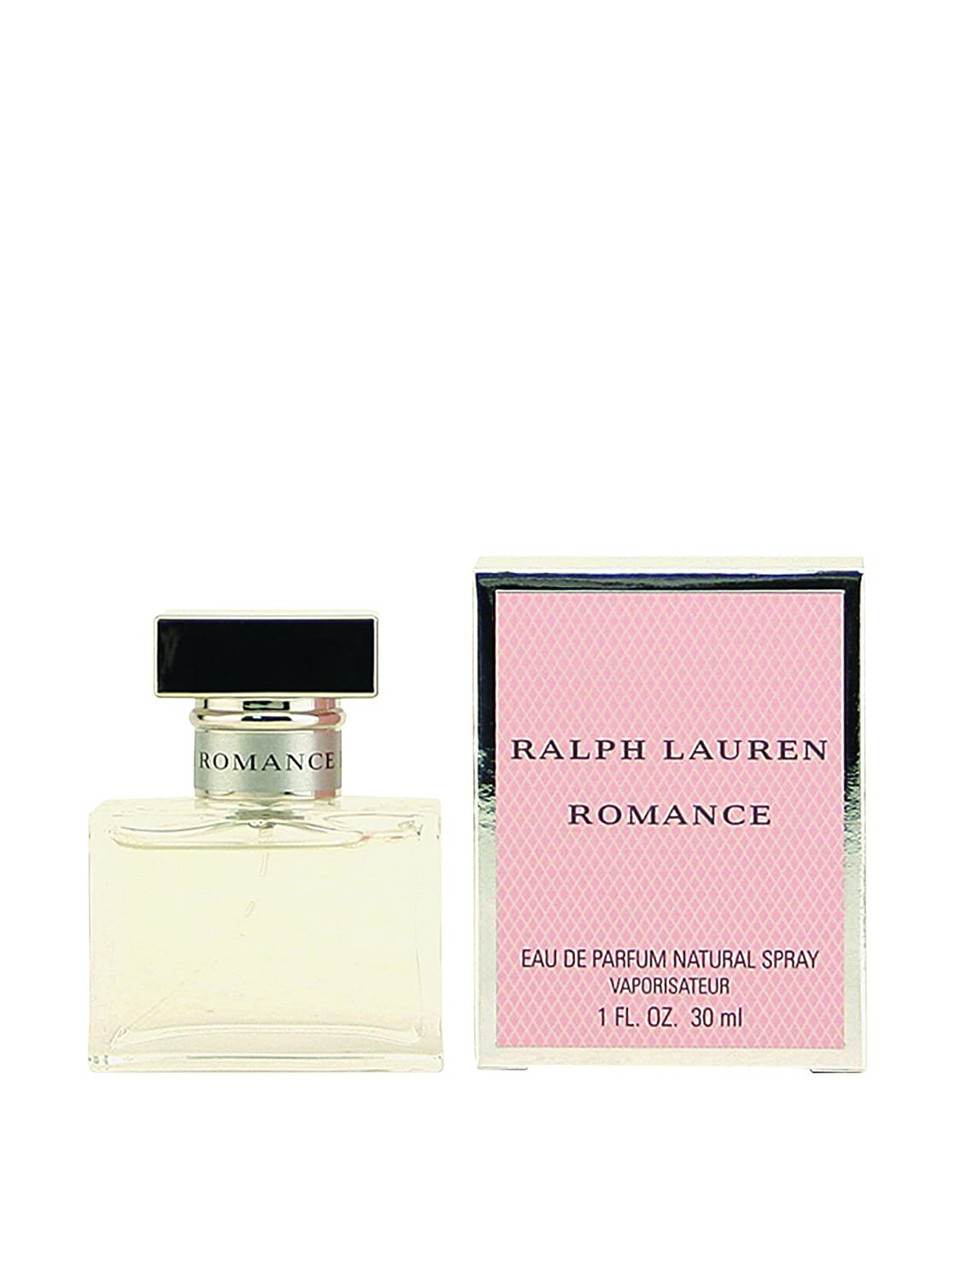 ROMANCE by Ralph Lauren - Eau De Parfum Spray 1 oz - Women